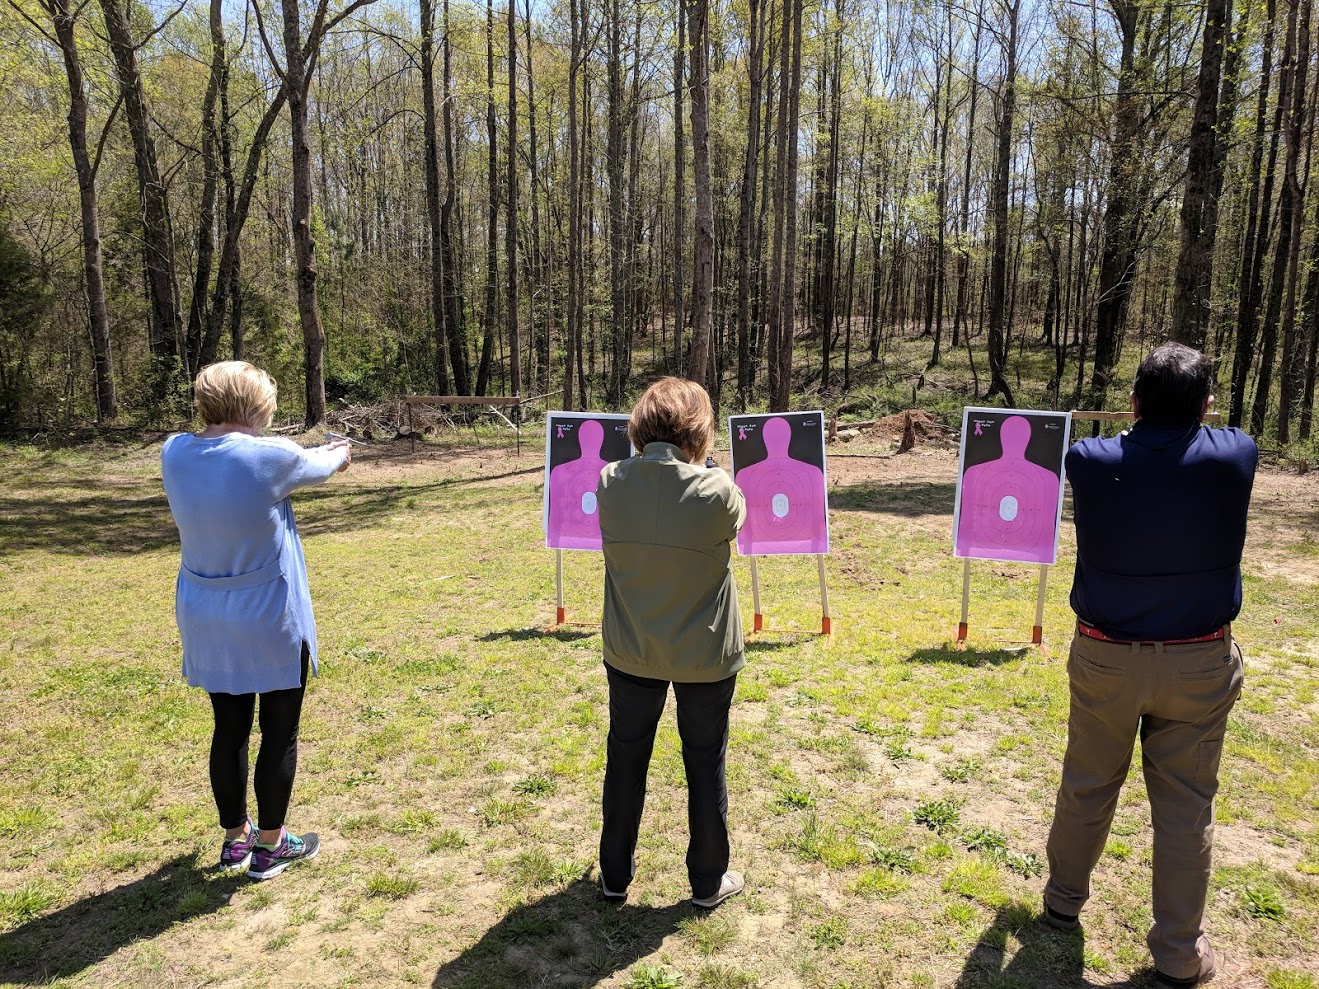 South Carolina conceal carry permit handgun pistol class course beginner